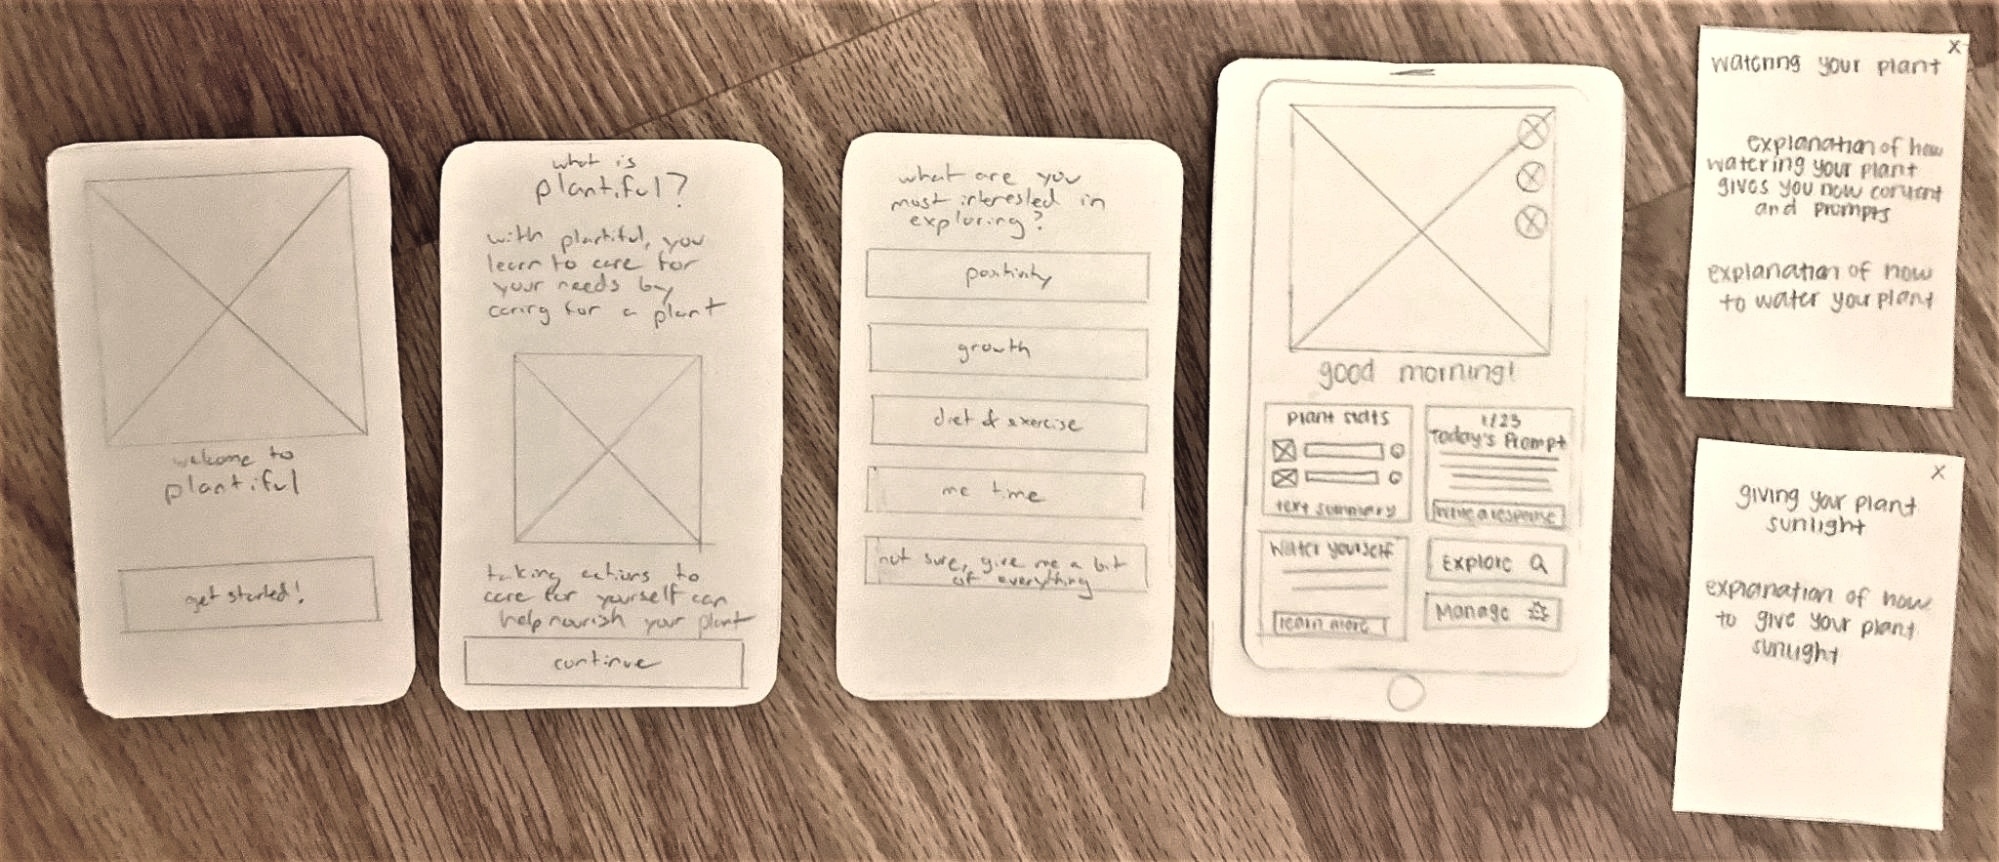 Plantiful app paper prototype